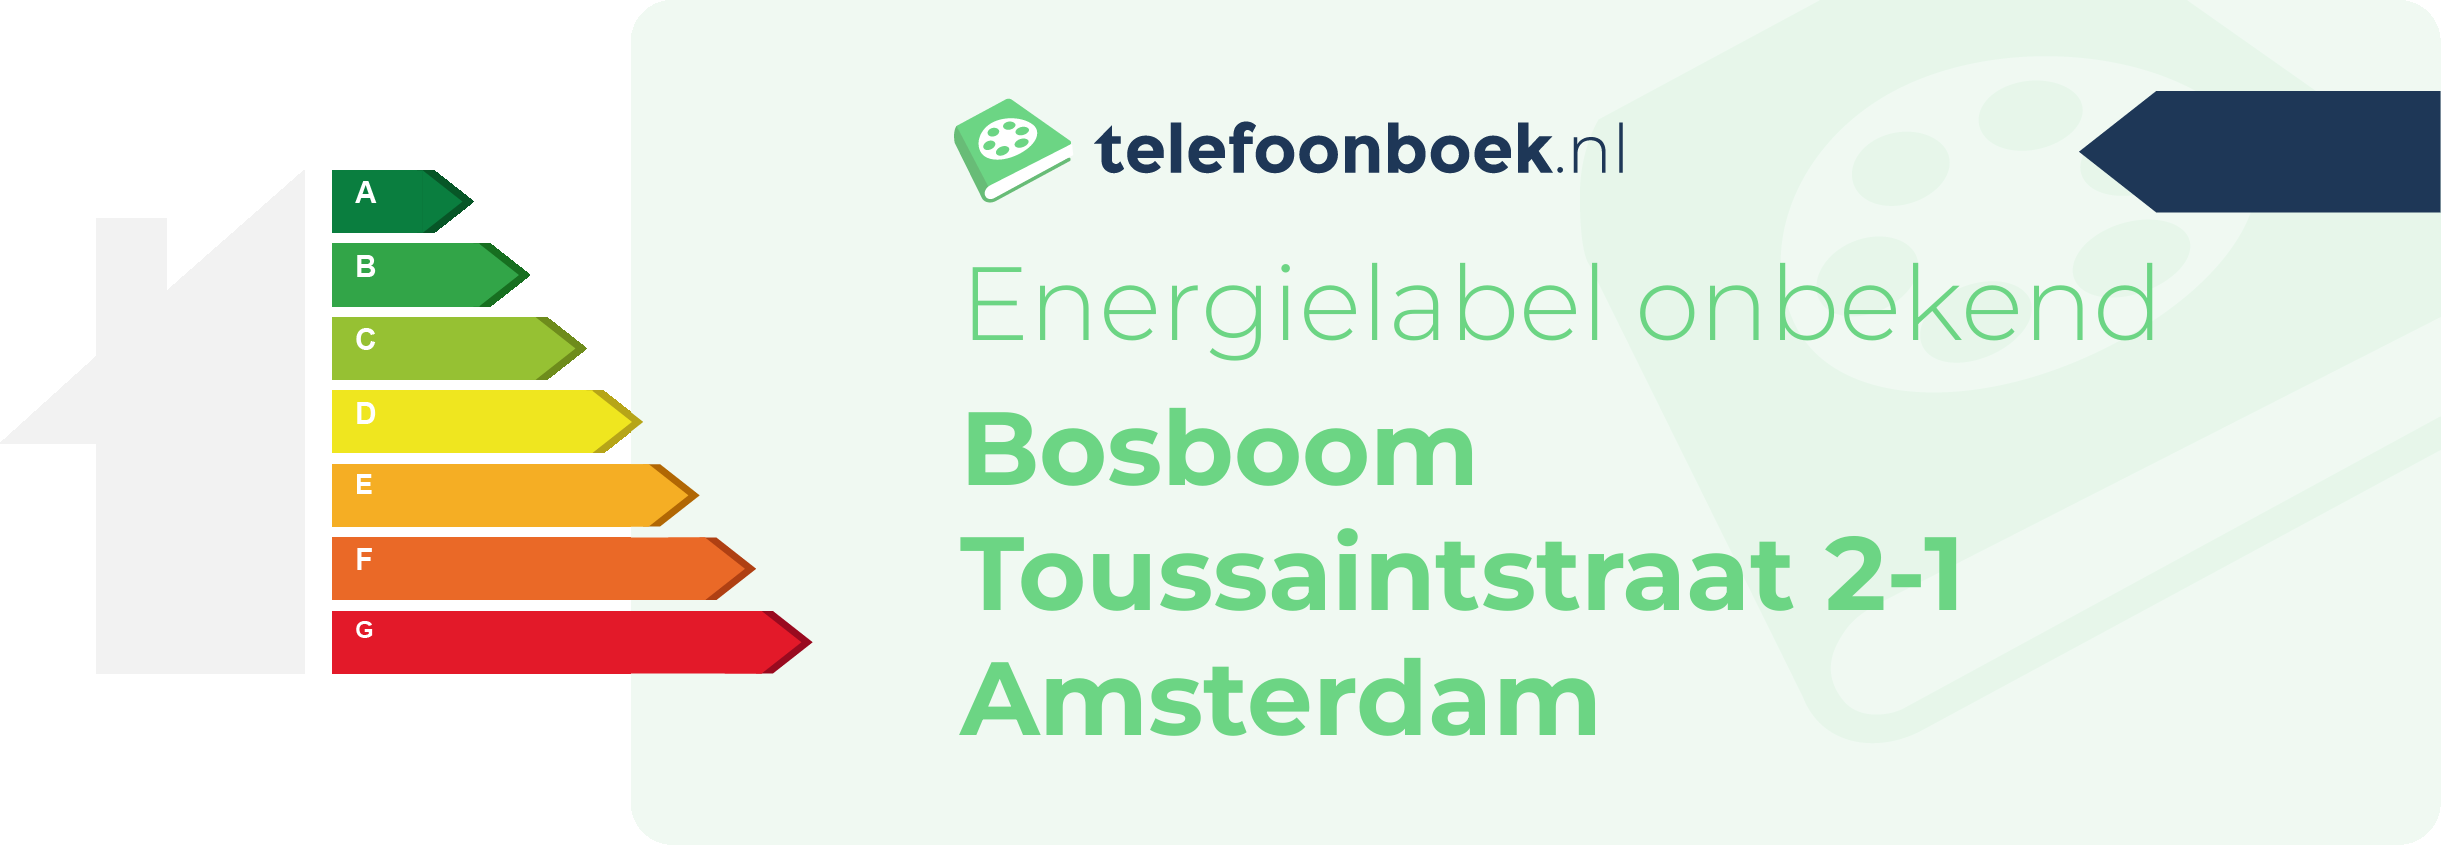 Energielabel Bosboom Toussaintstraat 2-1 Amsterdam